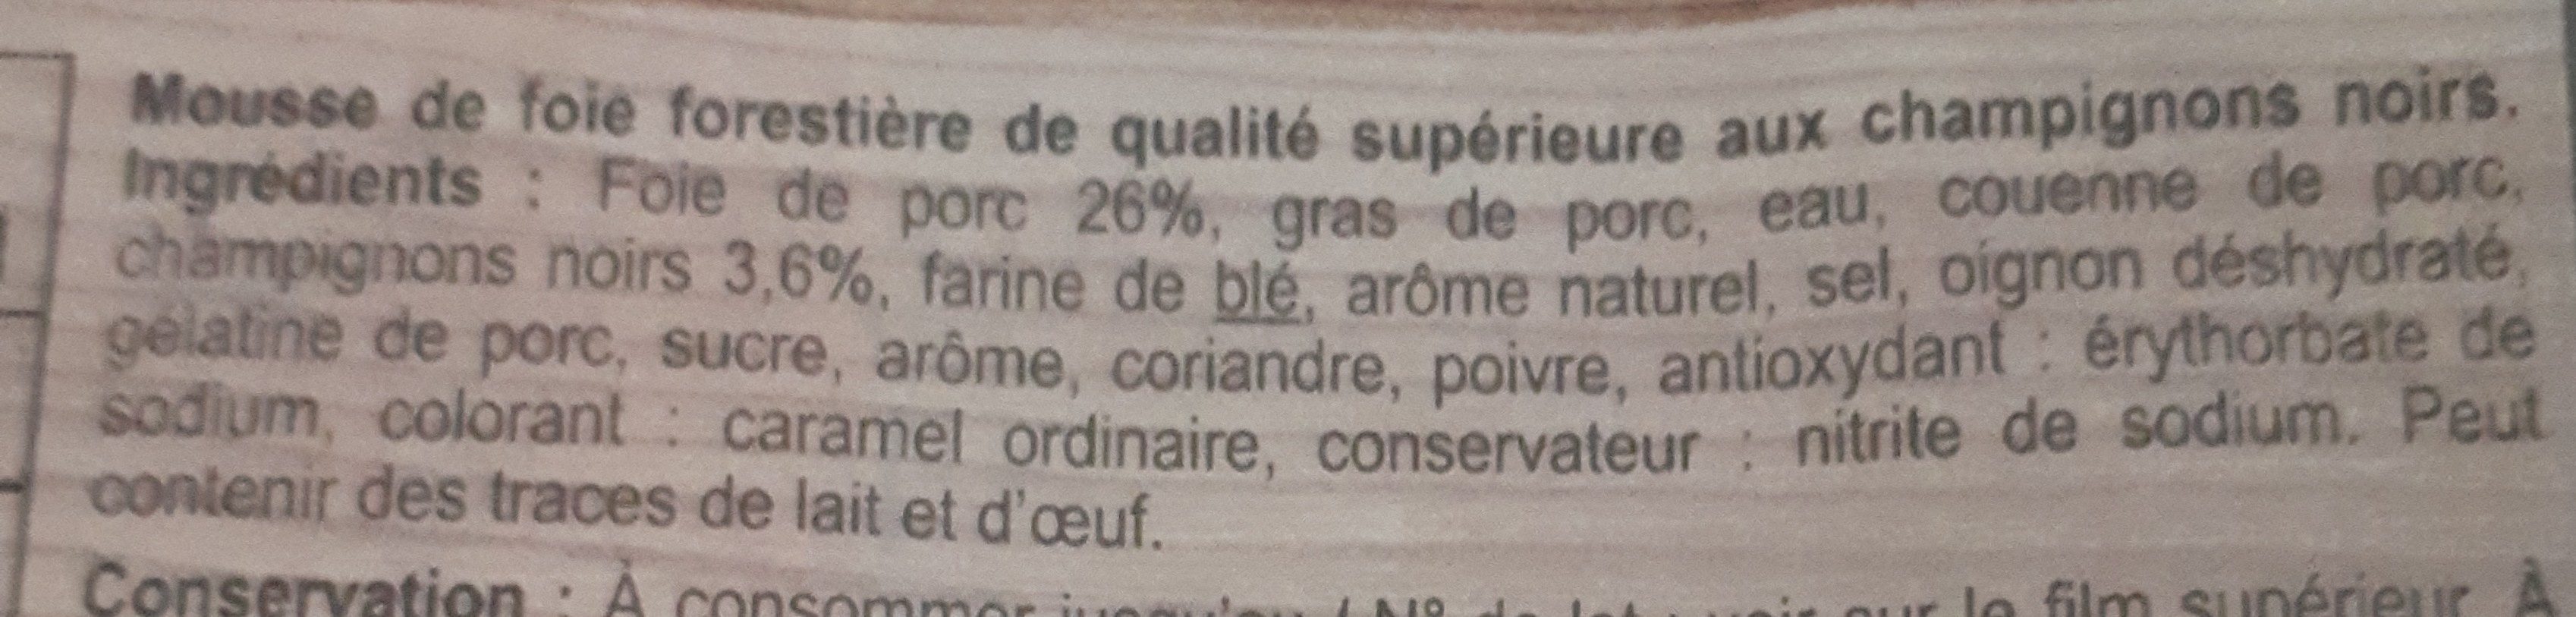 Mousse forestière - Ingrediënten - fr